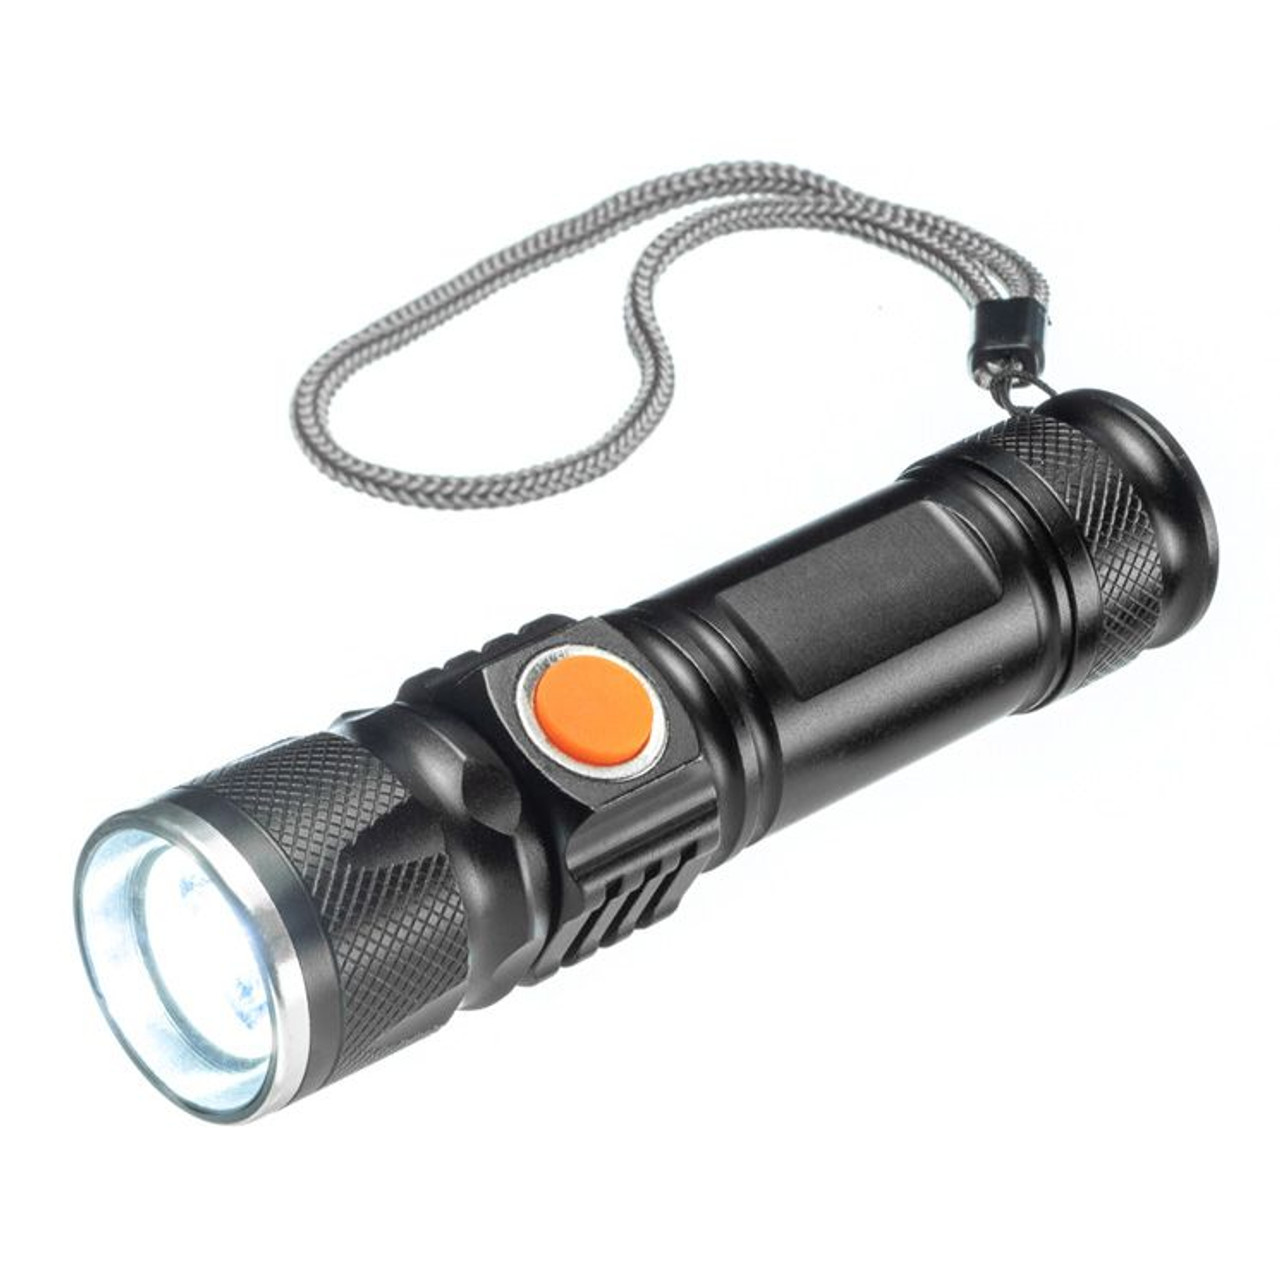 https://cdn11.bigcommerce.com/s-tumf4kk1l4/images/stencil/1280x1280/products/3893/7163/usb-rechargeable-flashlight-500-lumen-adjustable-beam-3-light-modes-28__22322.1640717216.jpg?c=1?imbypass=on